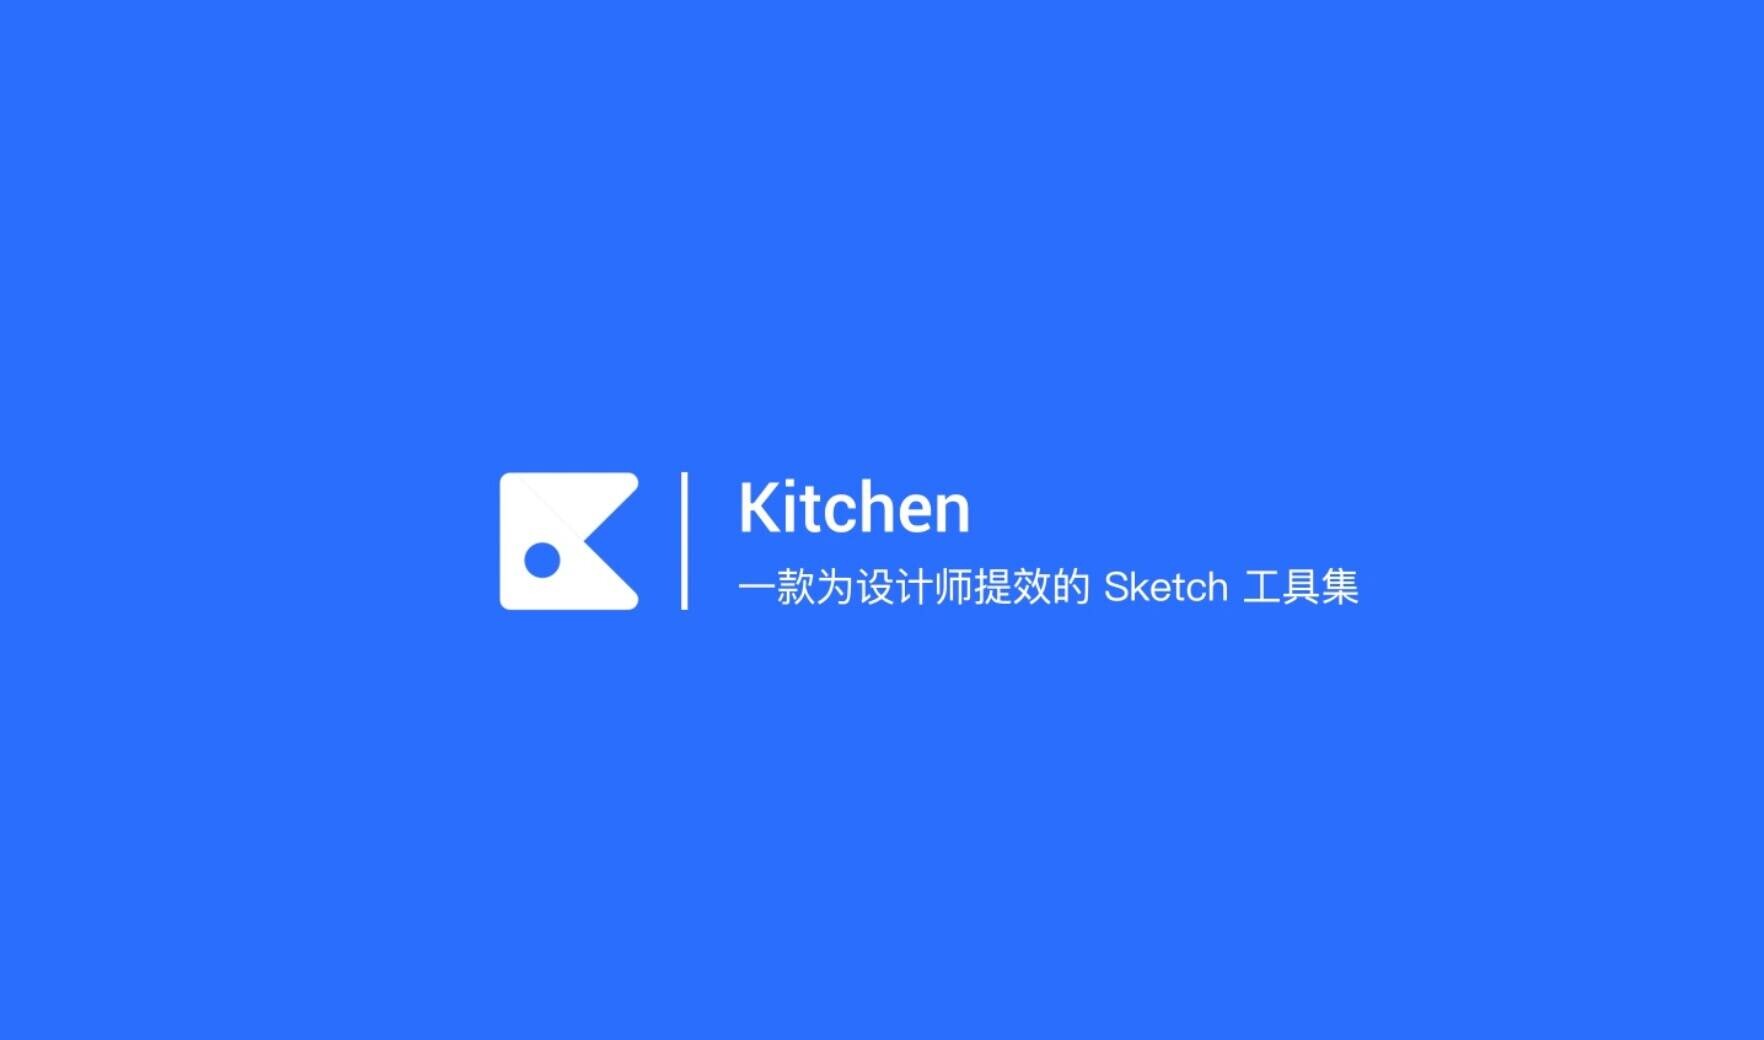 Kitchen for Mac(Sketch插件辅助功能管理)